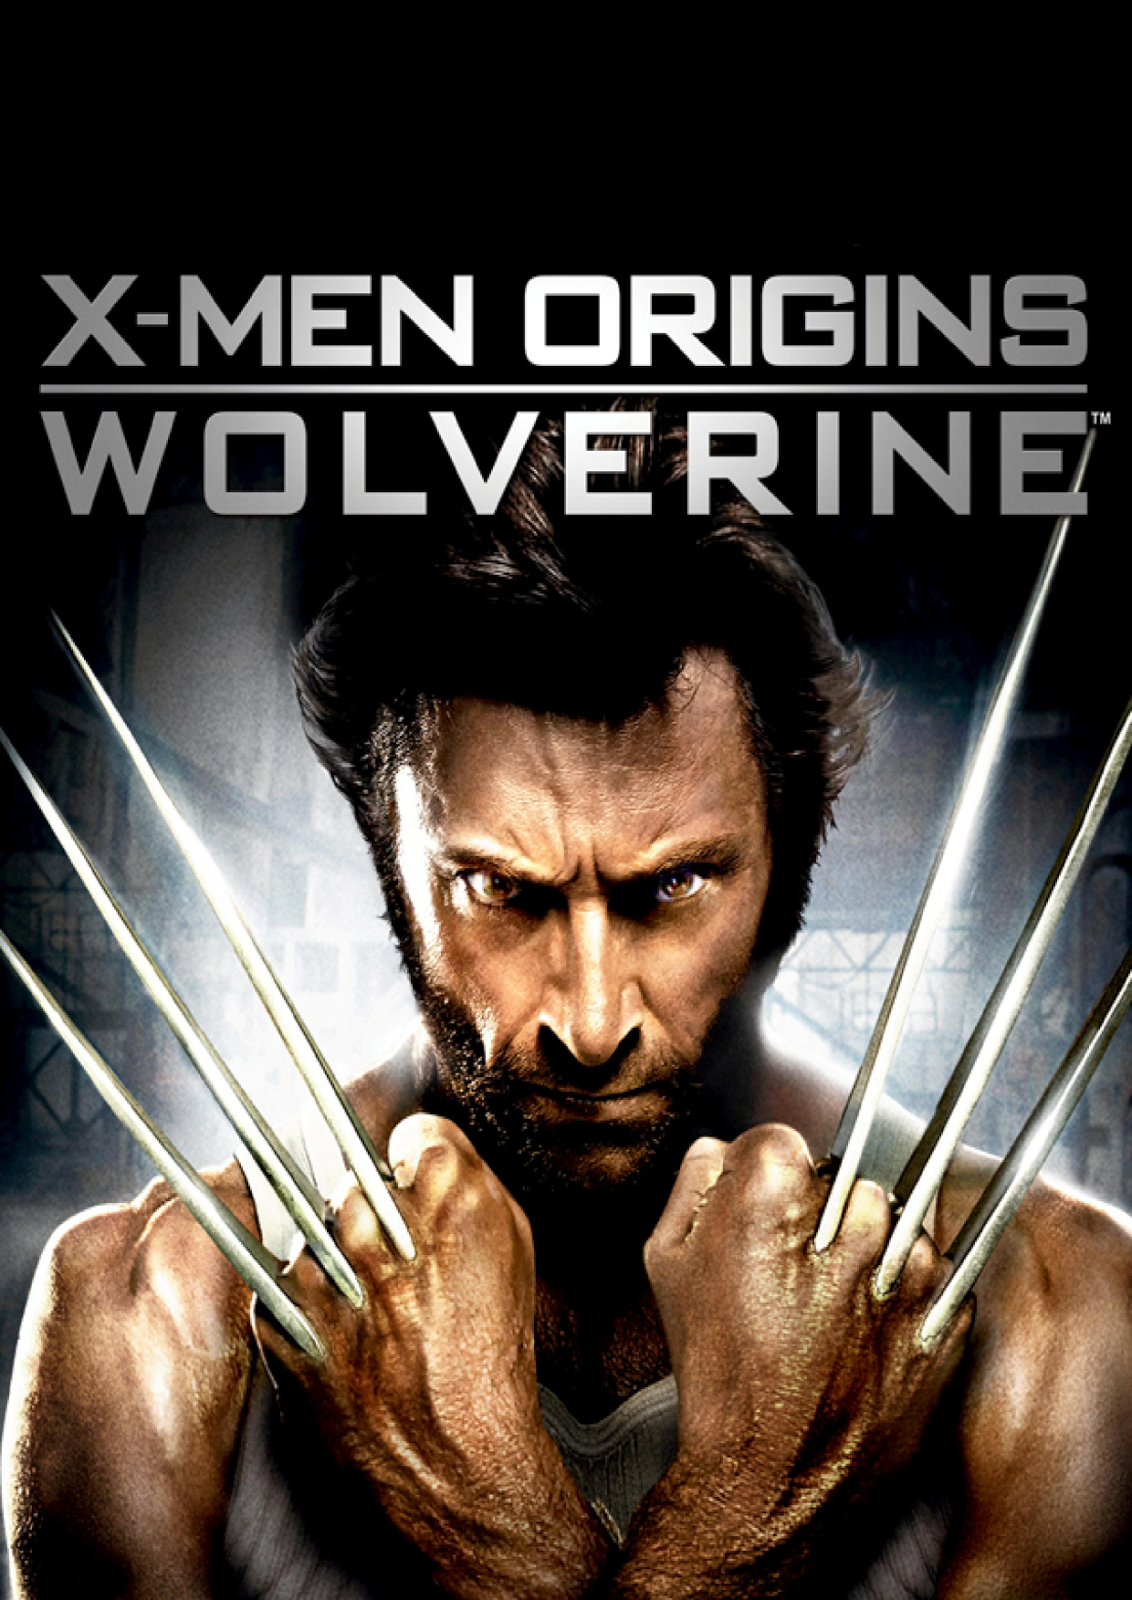 X-Men Origins - Wolverine cheats. 